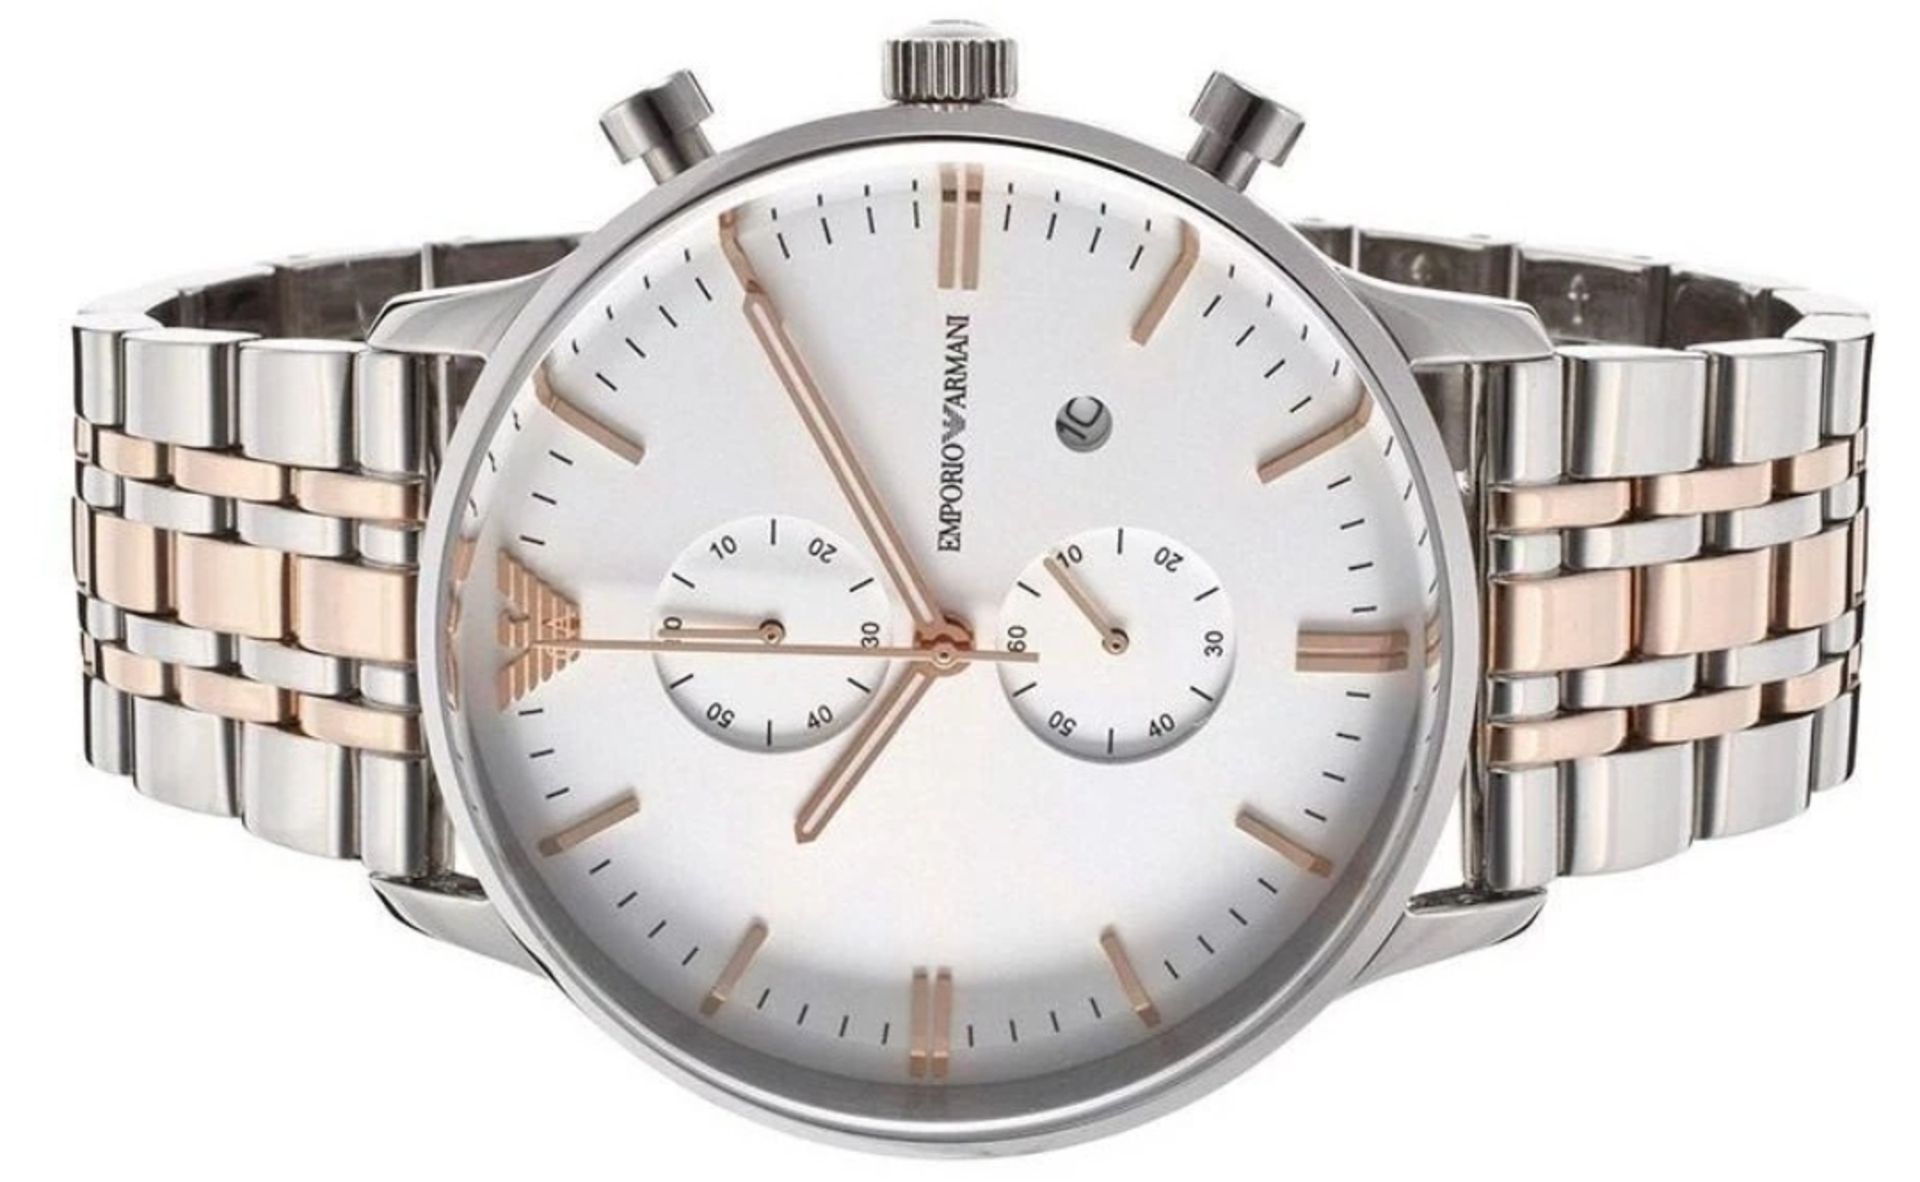 Emporio Armani AR0399 Men's Gianni Stainless Steel Bracelet Chronograph Watch - Image 2 of 4